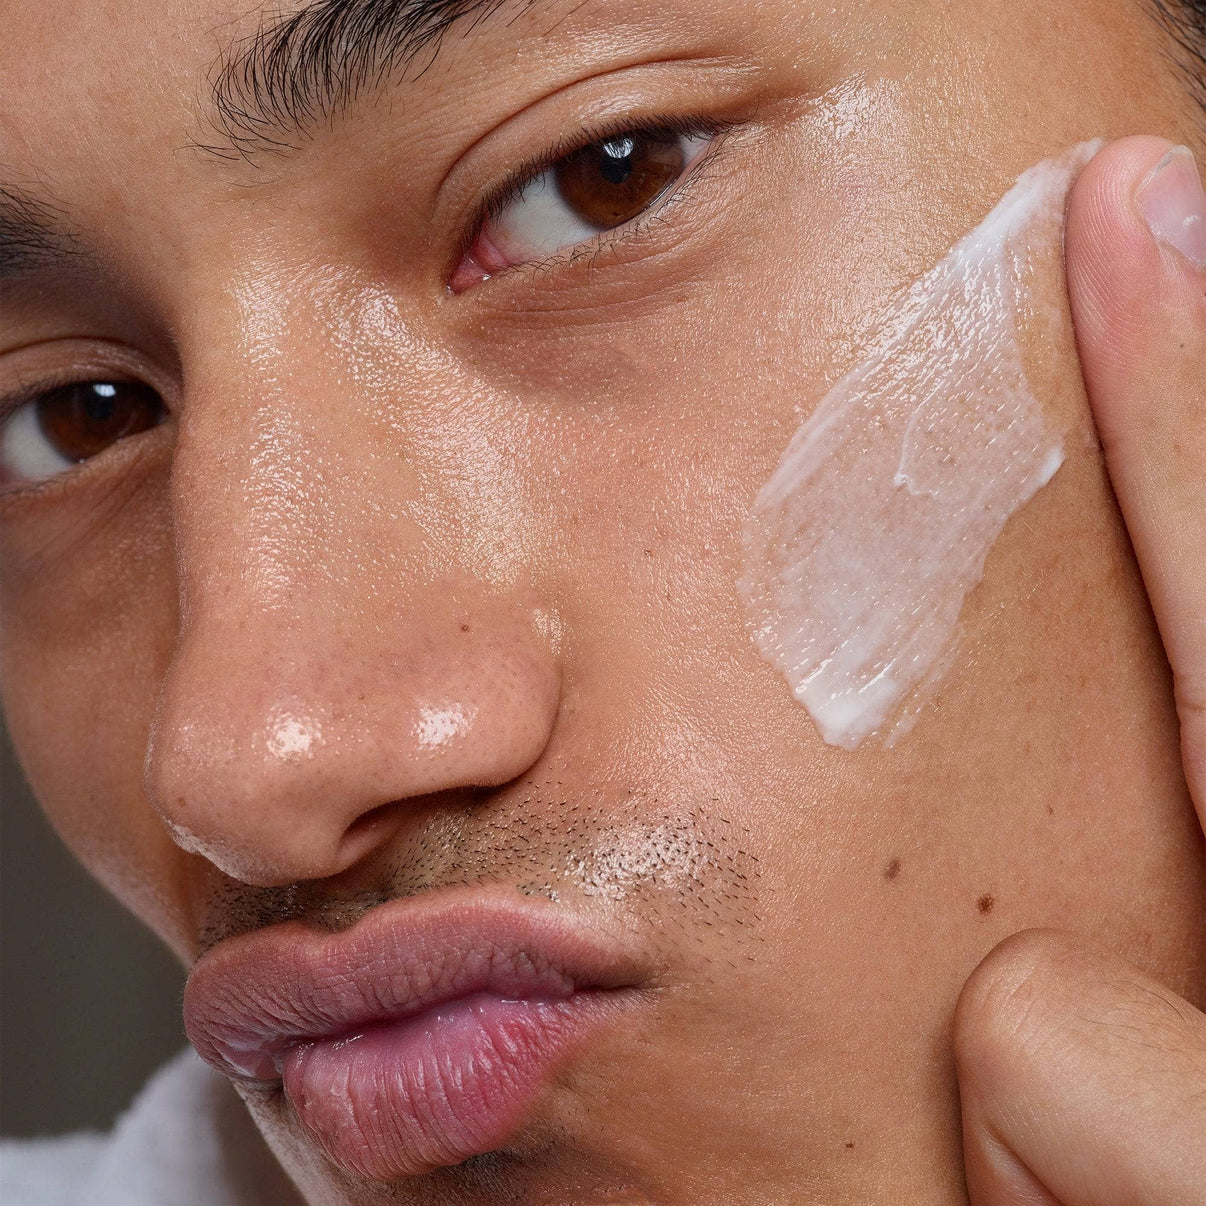 Male model applying Citrus-C Mask & Daily Moisturizer on his cheek